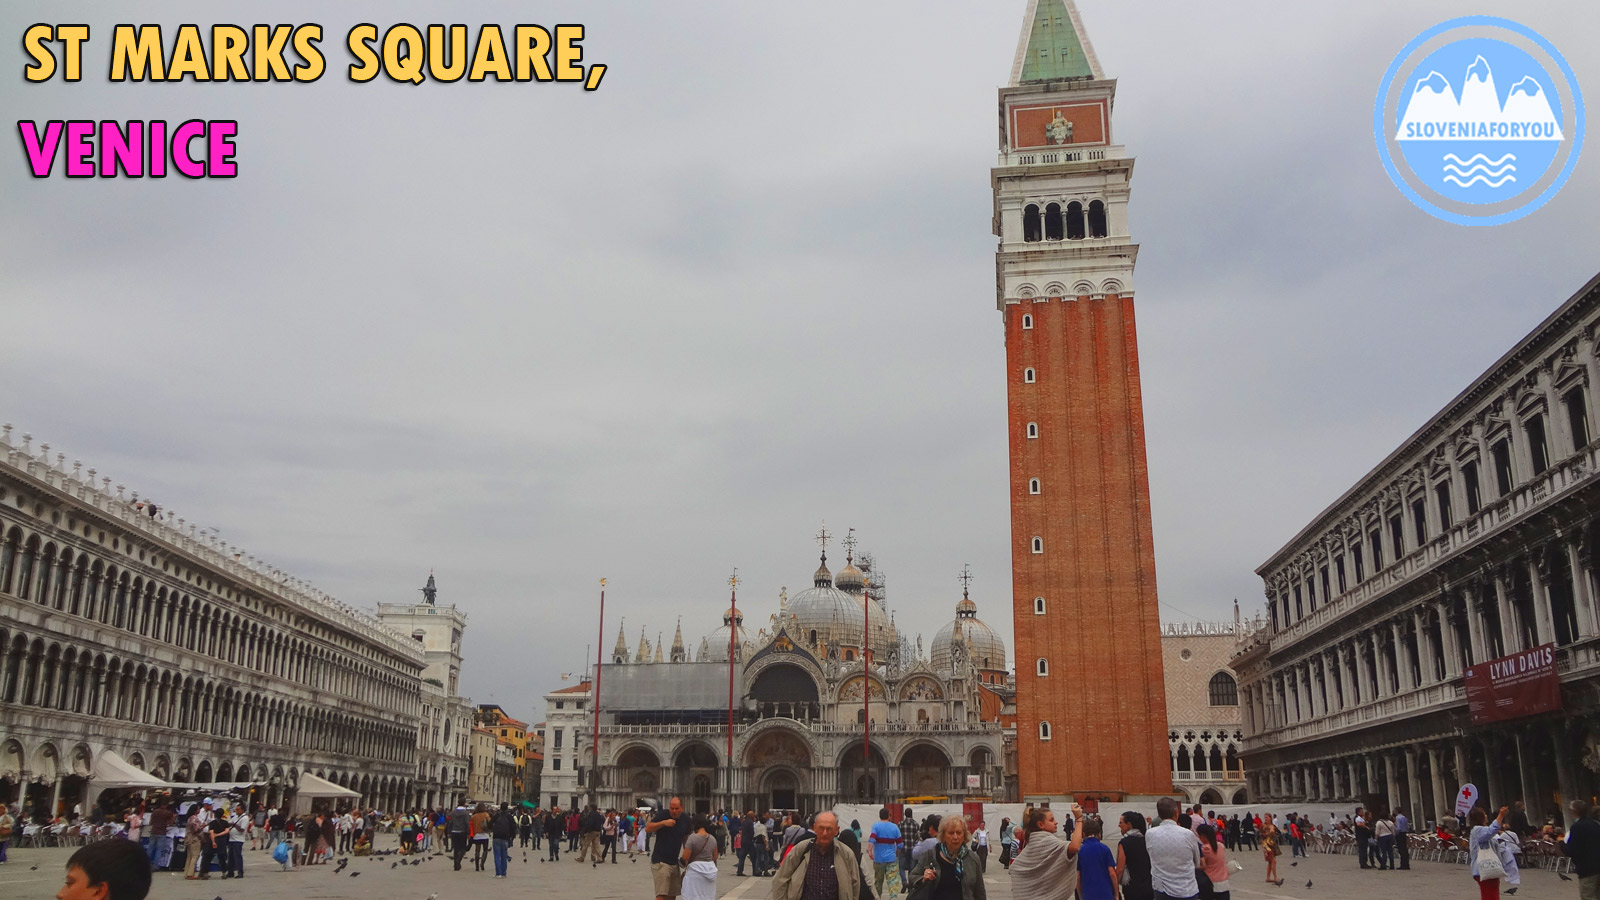 St Marks Square, Venice, Sloveniaforyou